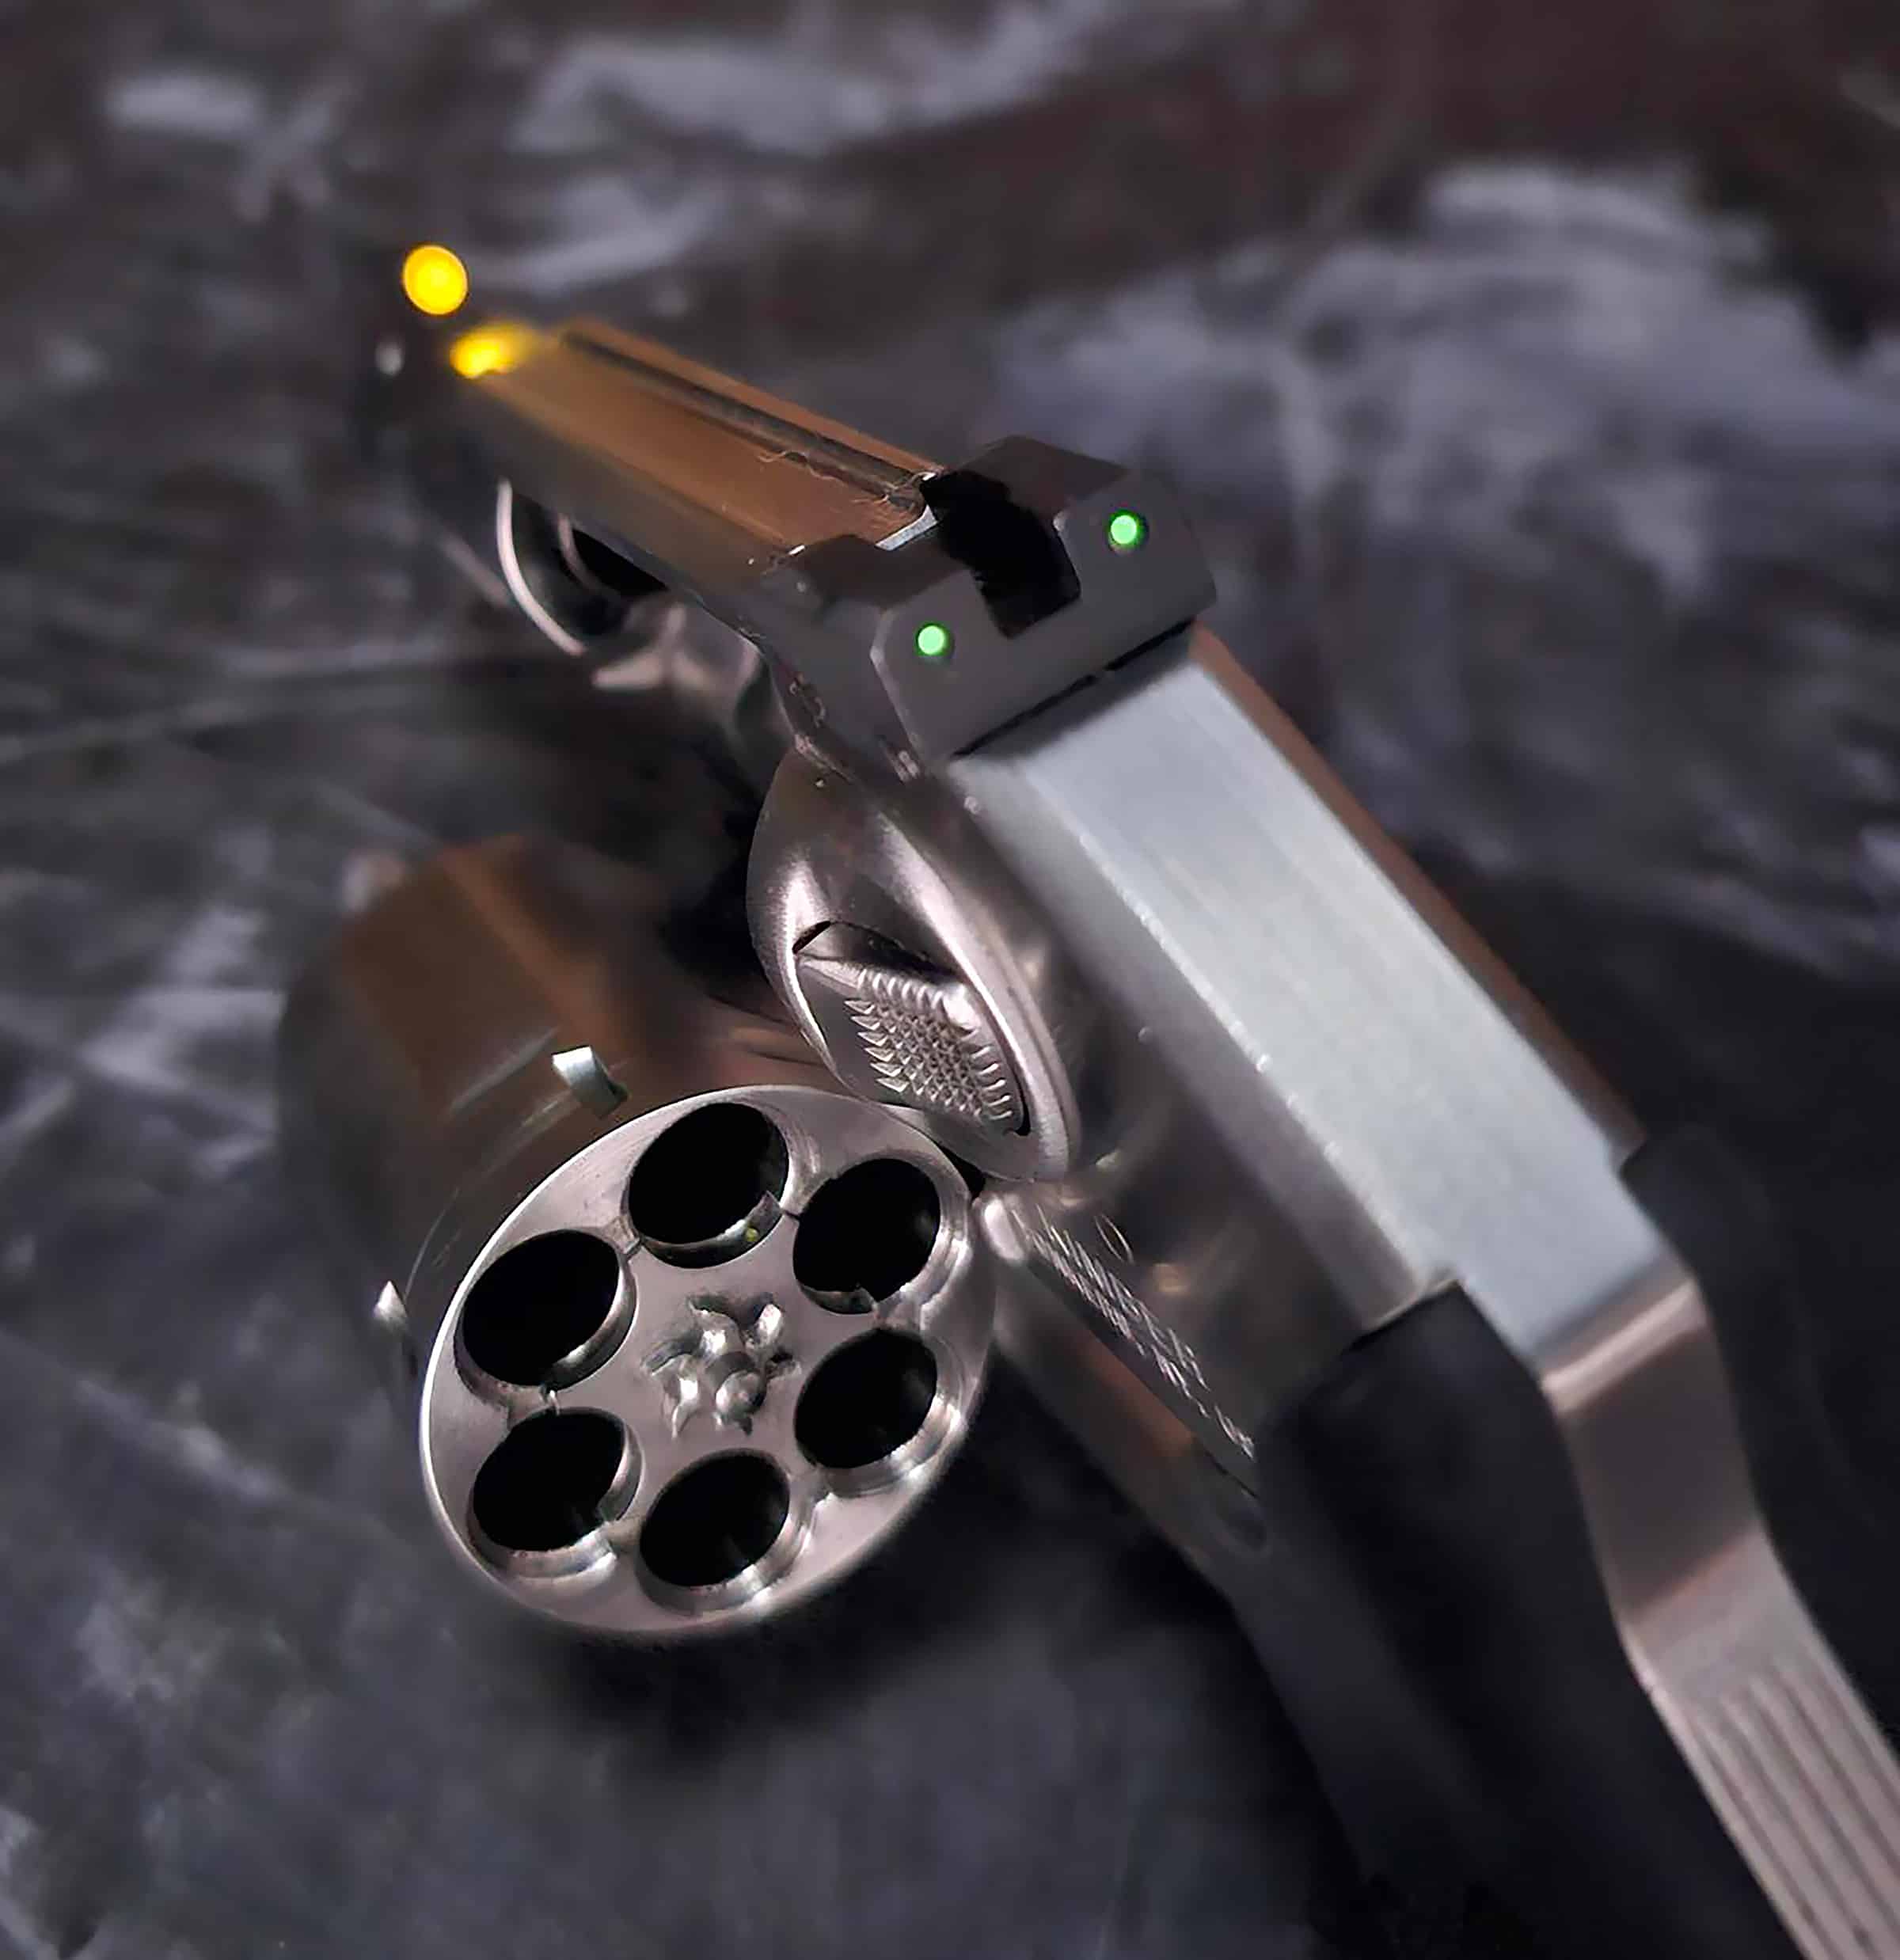 XS Sights R3D Night Sights mounted on Kimber K6 Revolver